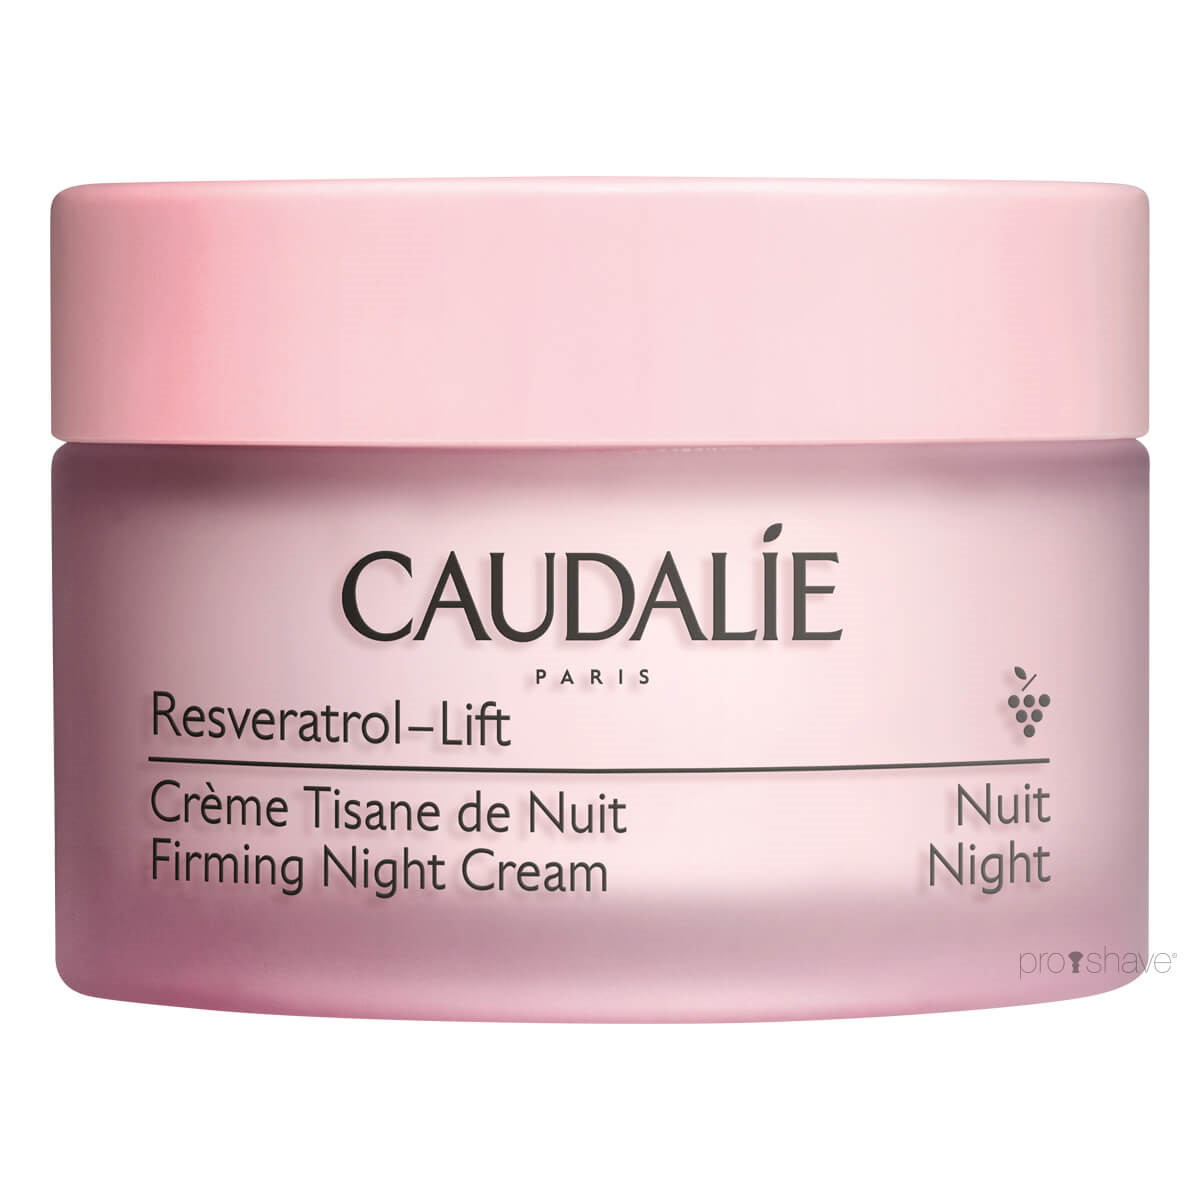 Caudalie Resveratrol Lift, Firming Night Cream, 50 ml.